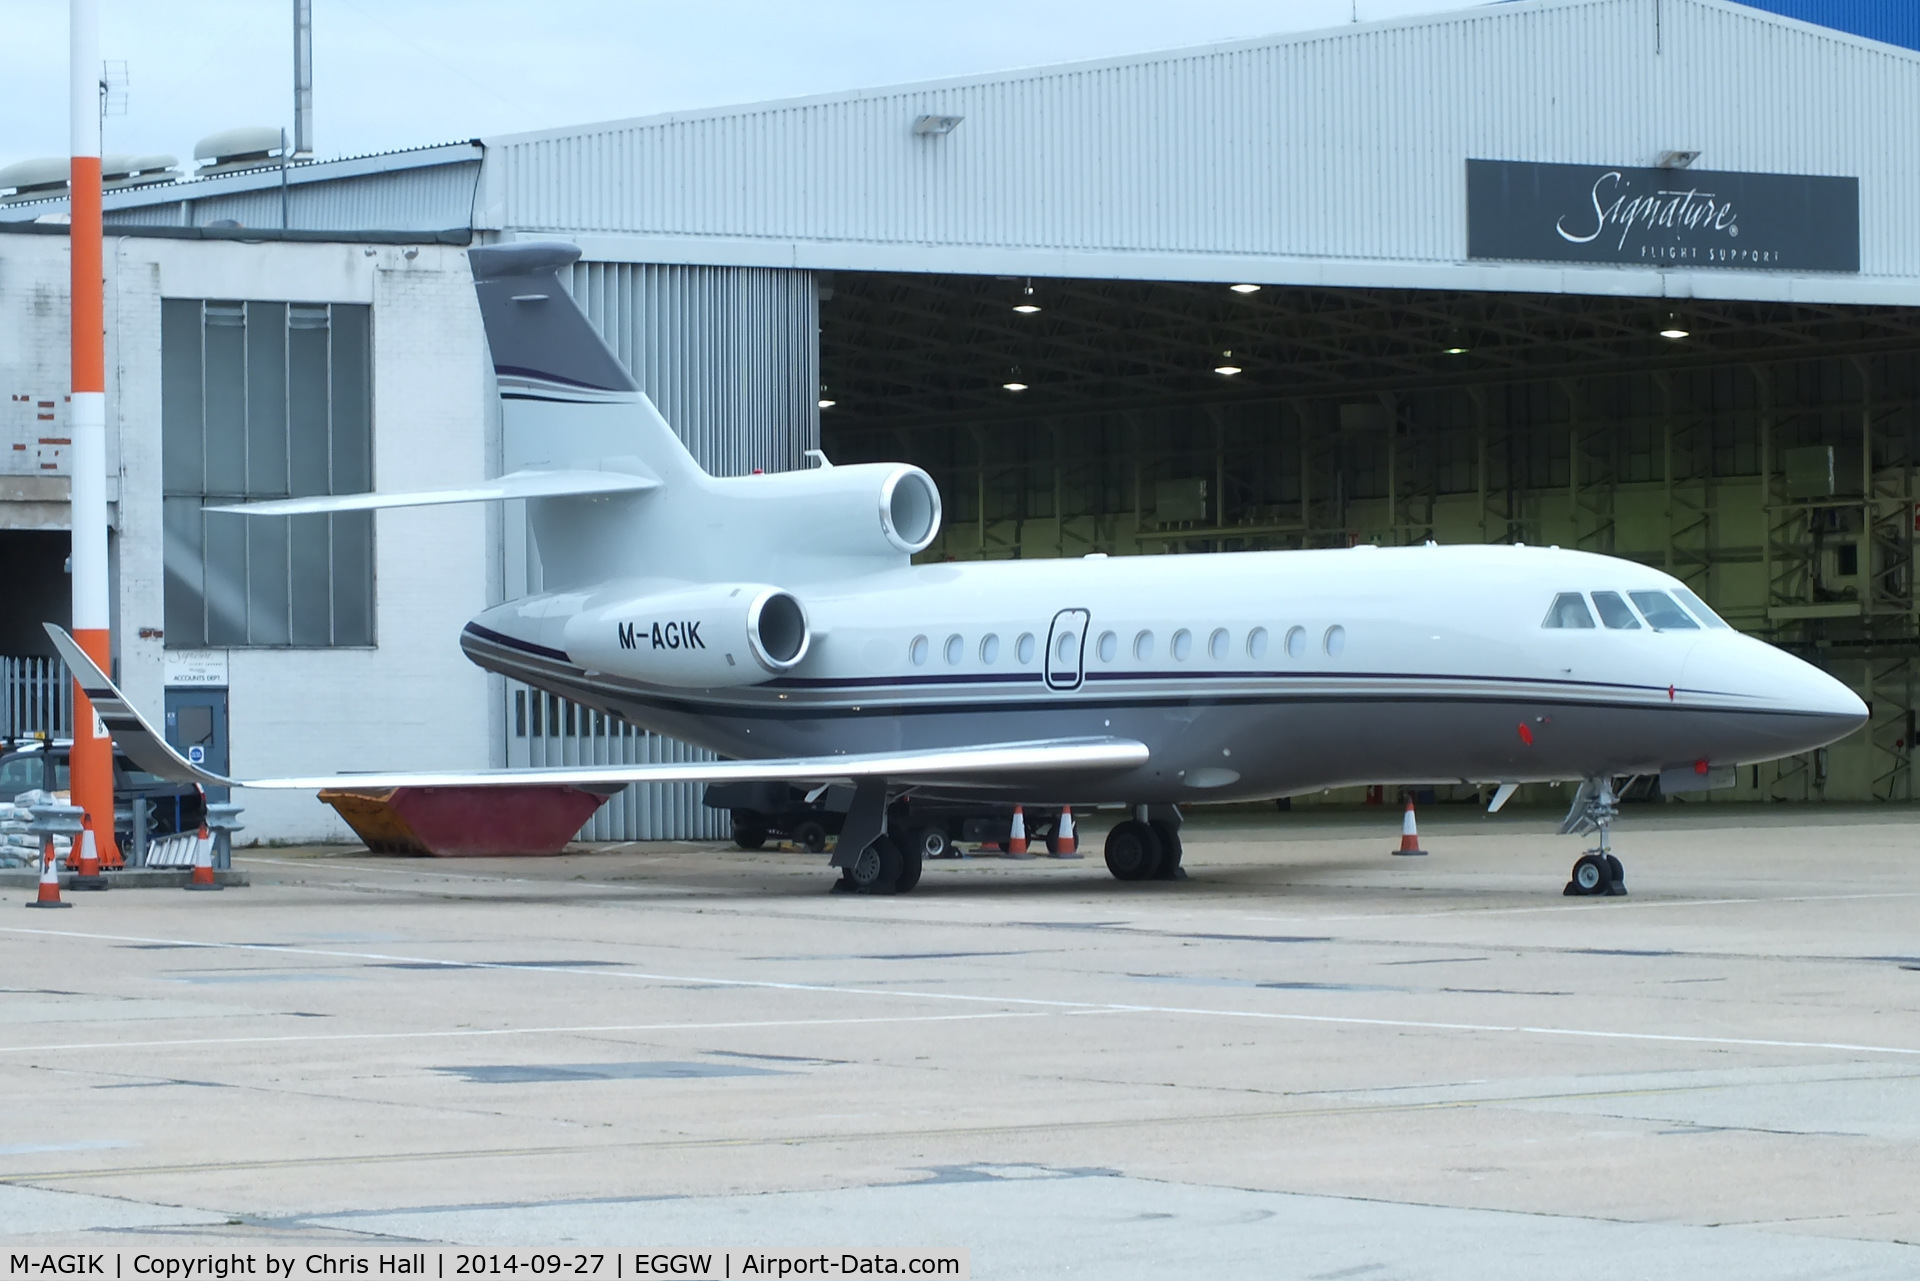 M-AGIK, 2014 Dassault Falcon 900EX C/N 274, parked at Luton